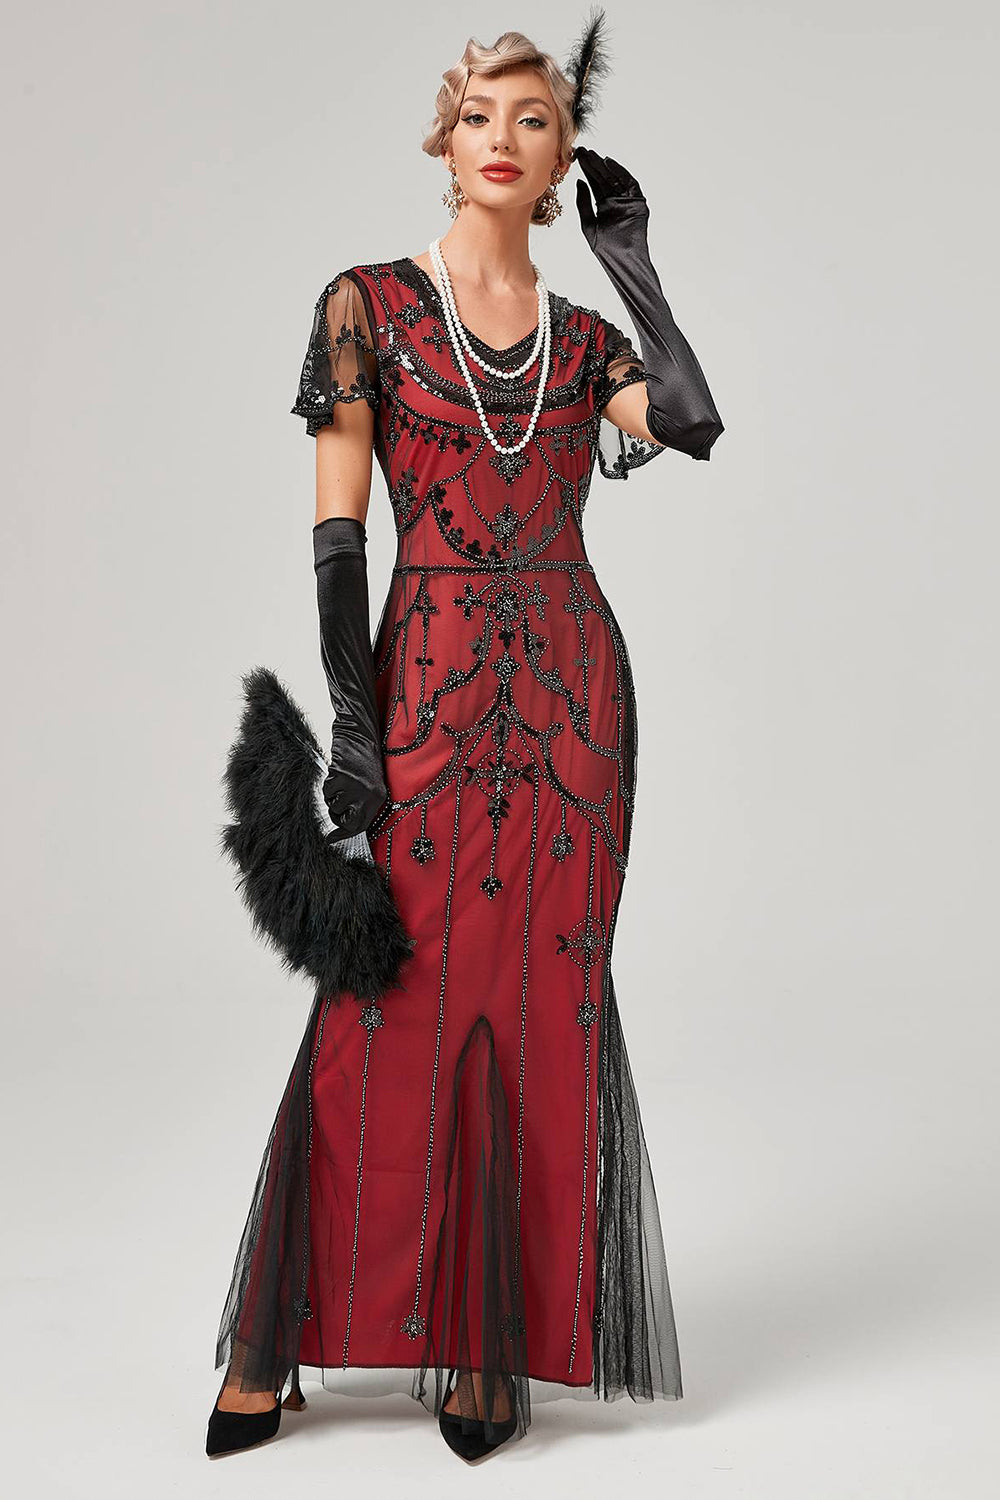 ZAPAKA Women Gatsby Dress Sequins Red Long 1920s Flapper Dress with ...